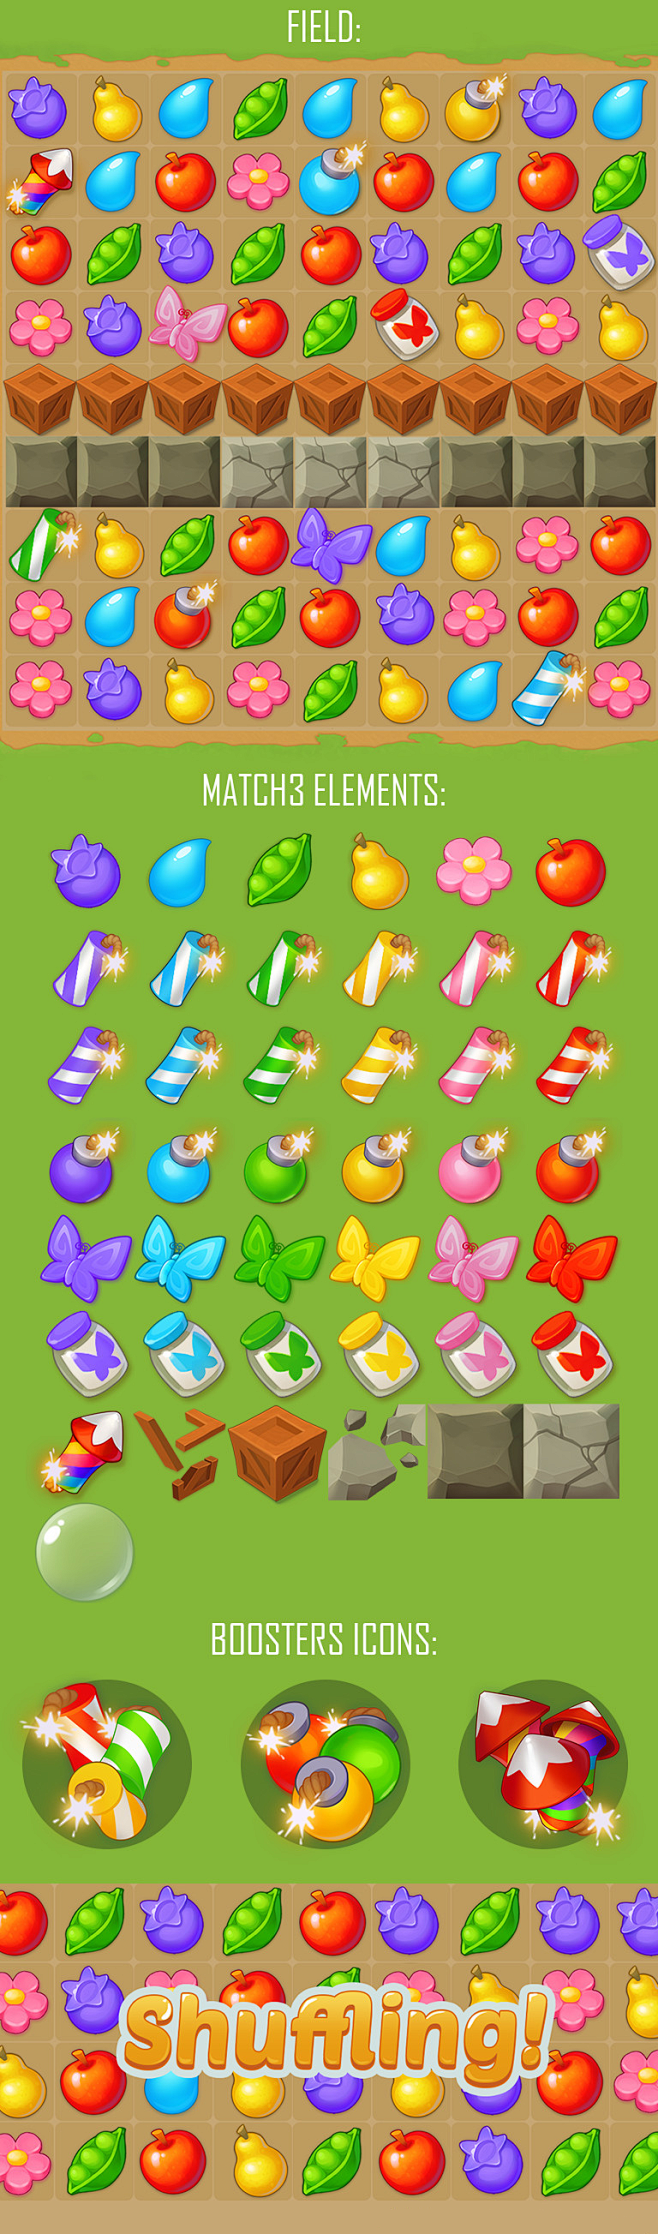 Match3 elements